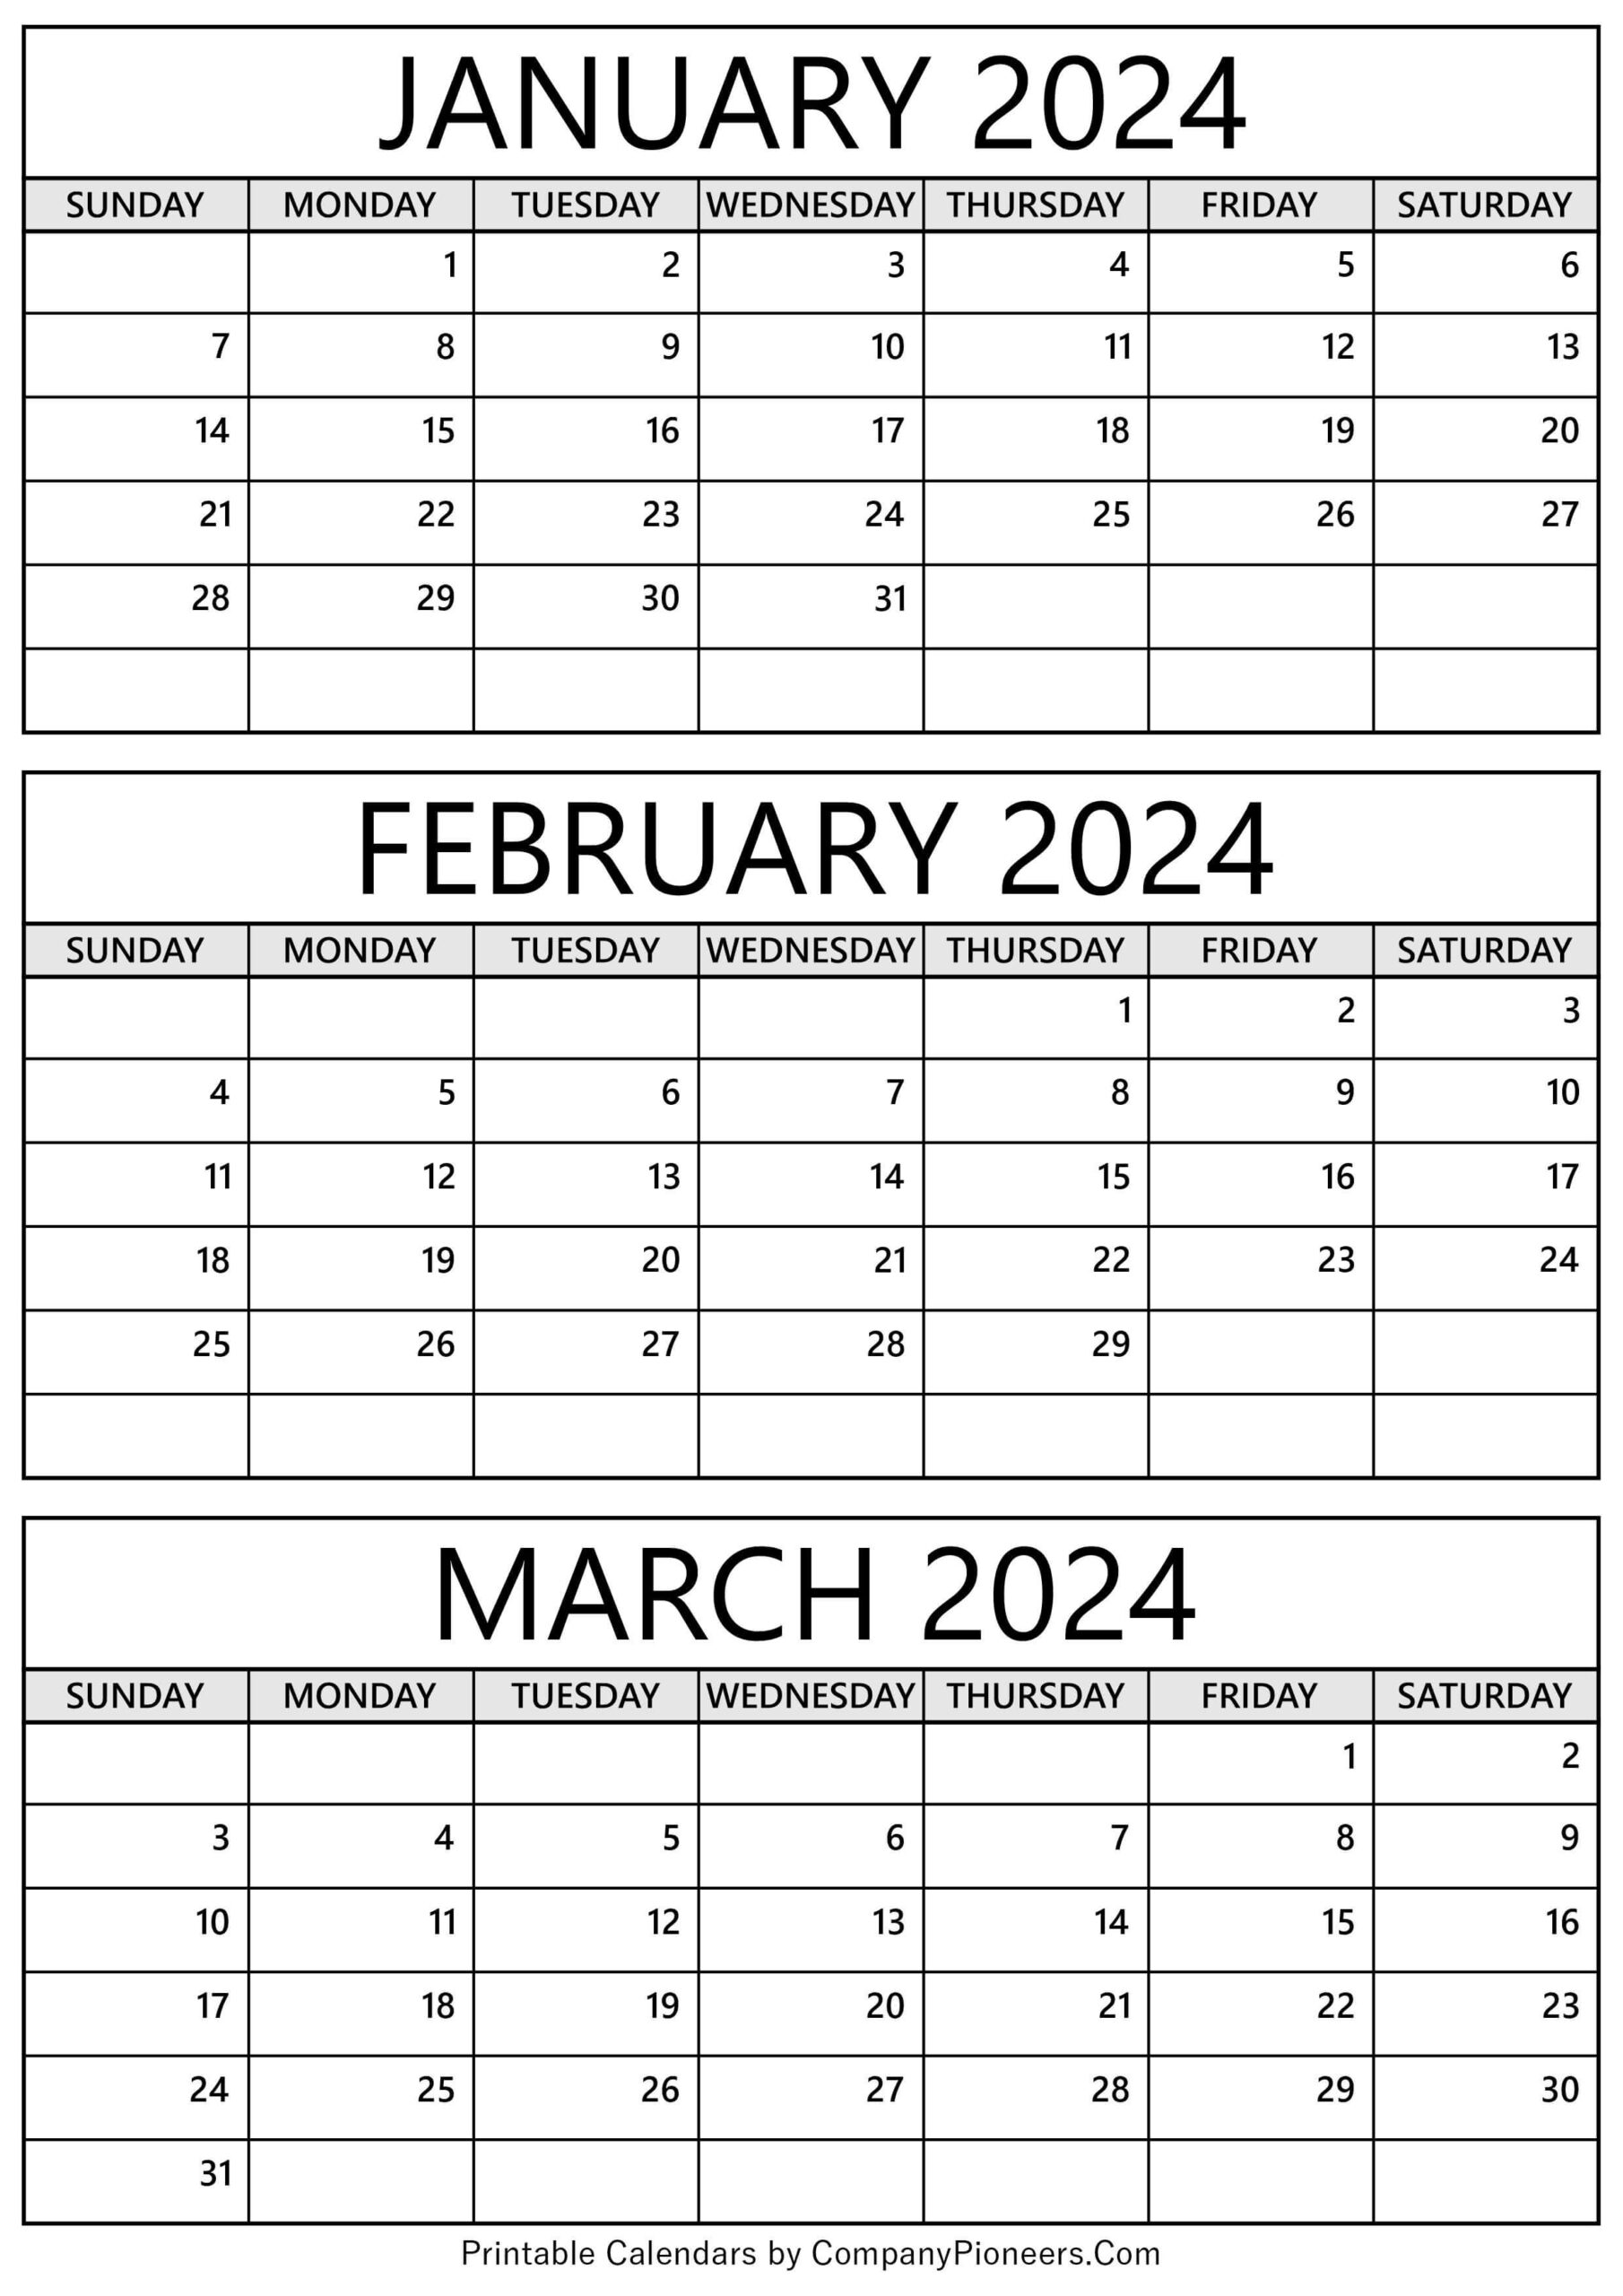 January February March 2024 Calendar Printable - Template for January February March 2024 Printable Calendar